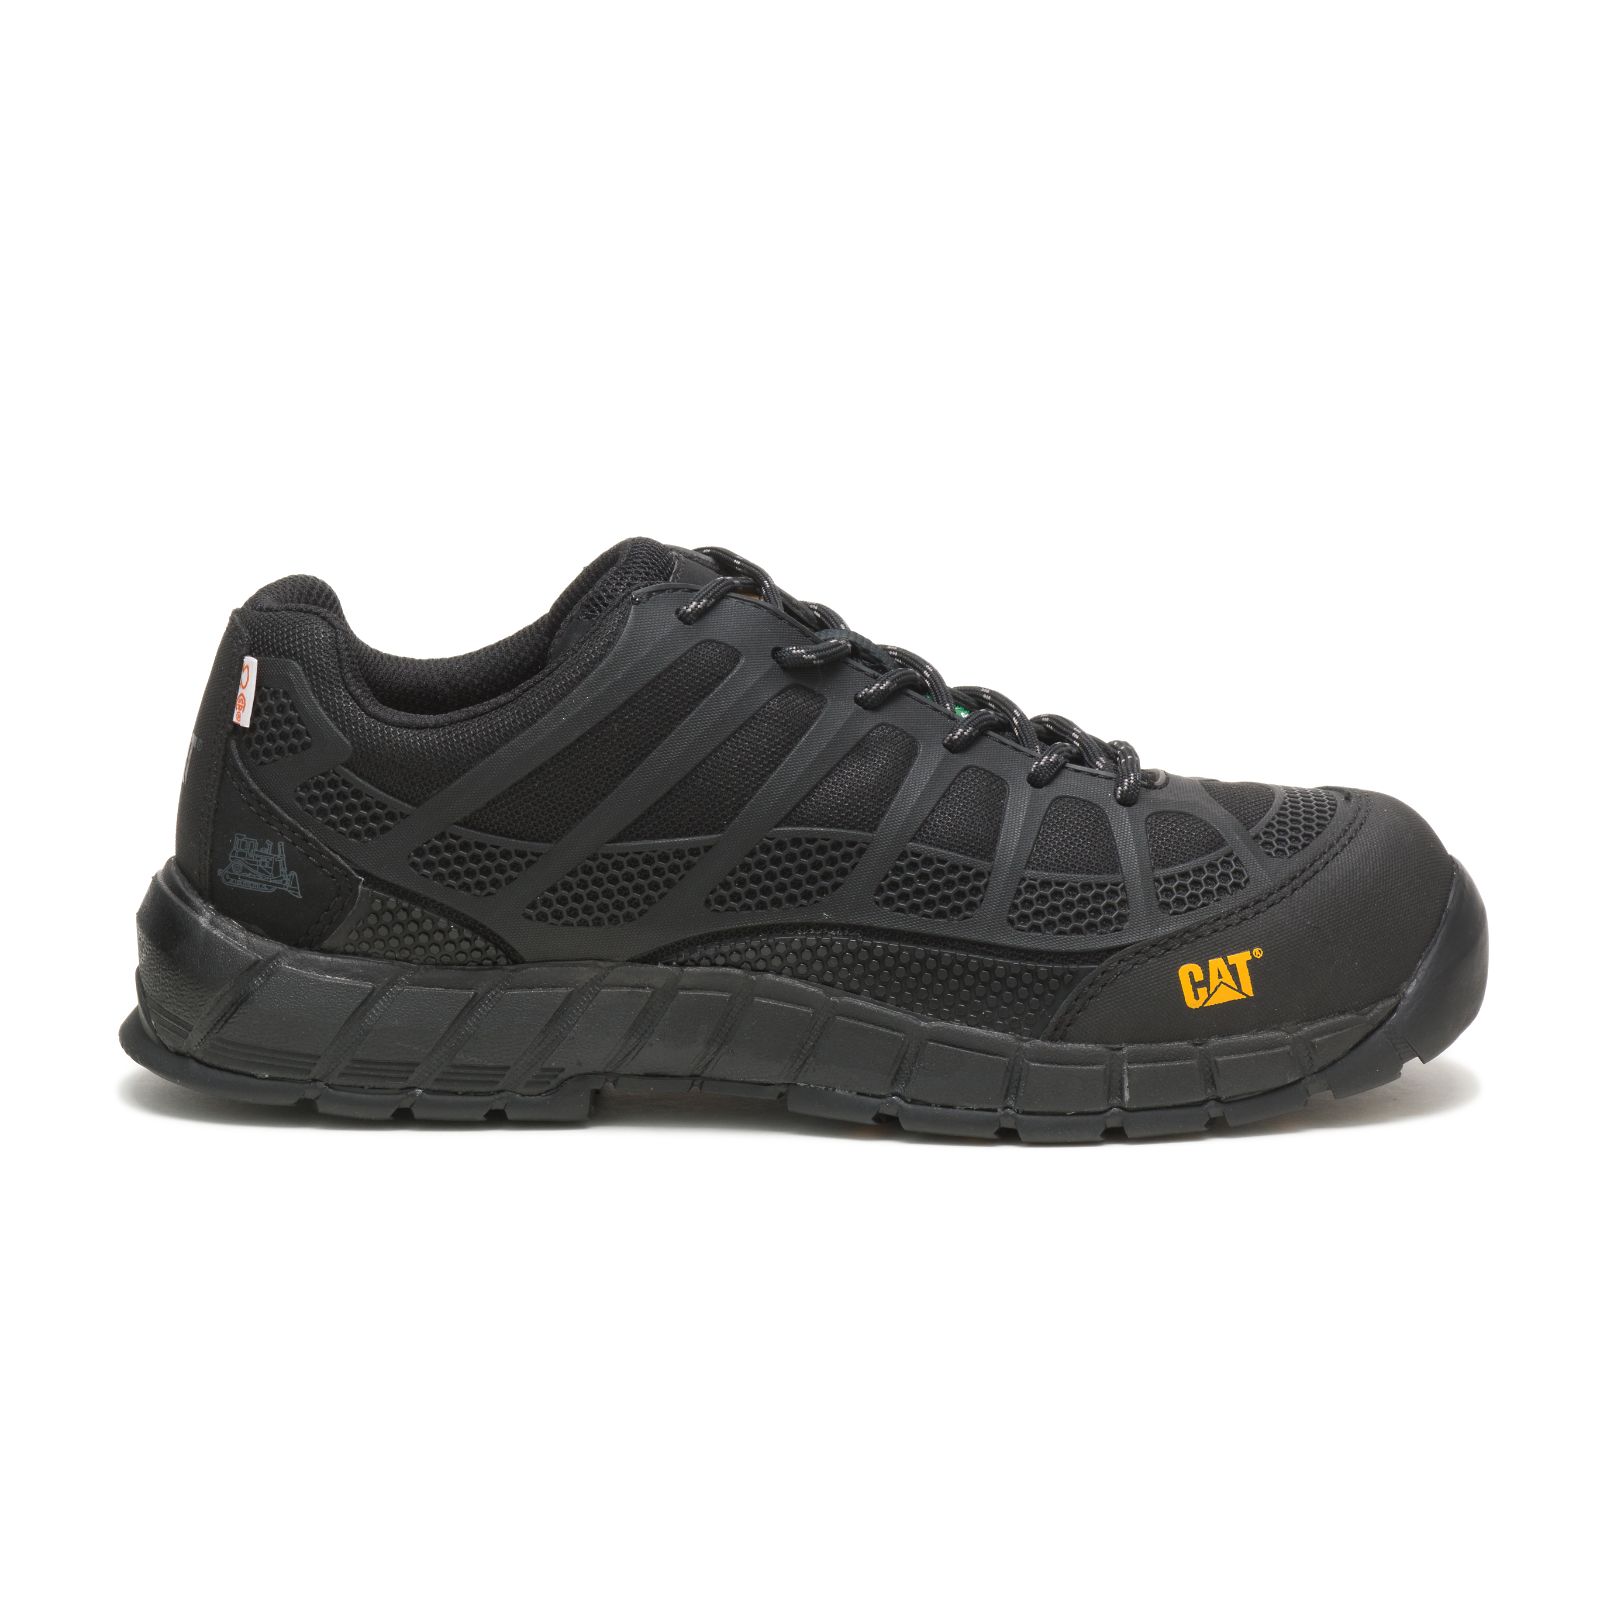 Caterpillar Work Shoes UAE - Caterpillar Streamline Csa Shoe (Composite Toe, Non Metallic) Mens - Black BPYDOF057